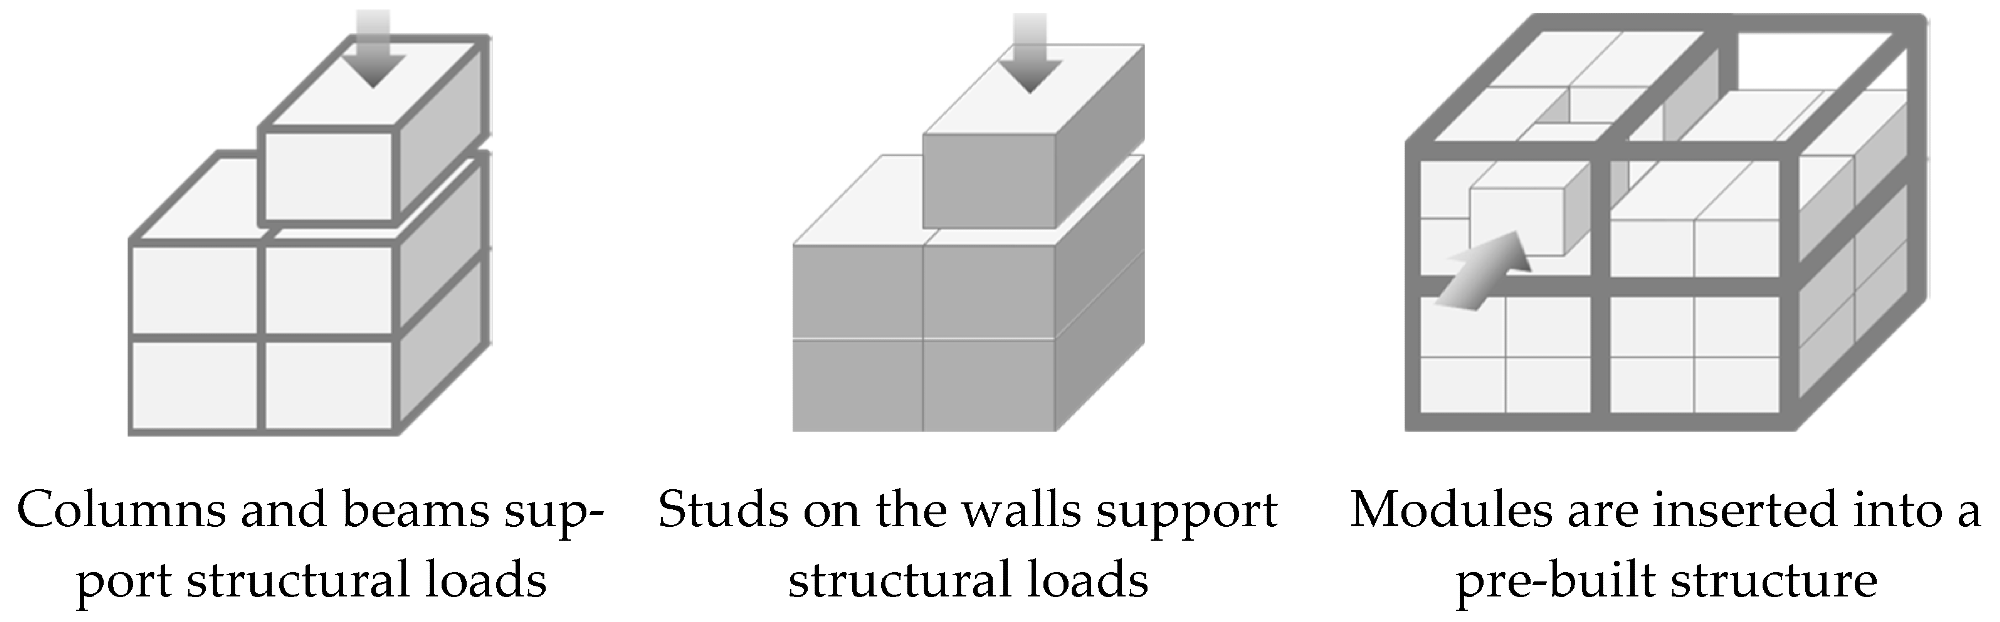 Modular construction methods.